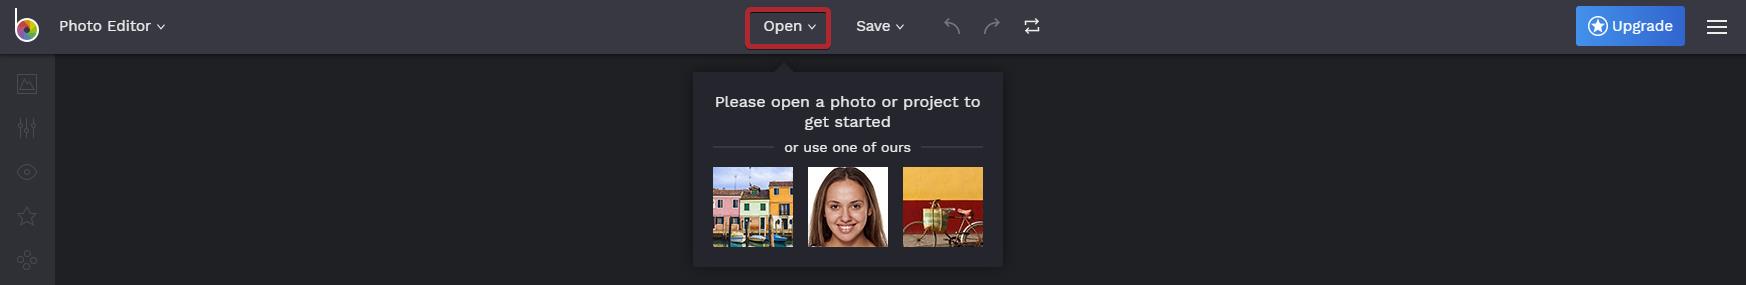 in_photo_editor__select_open.jpg